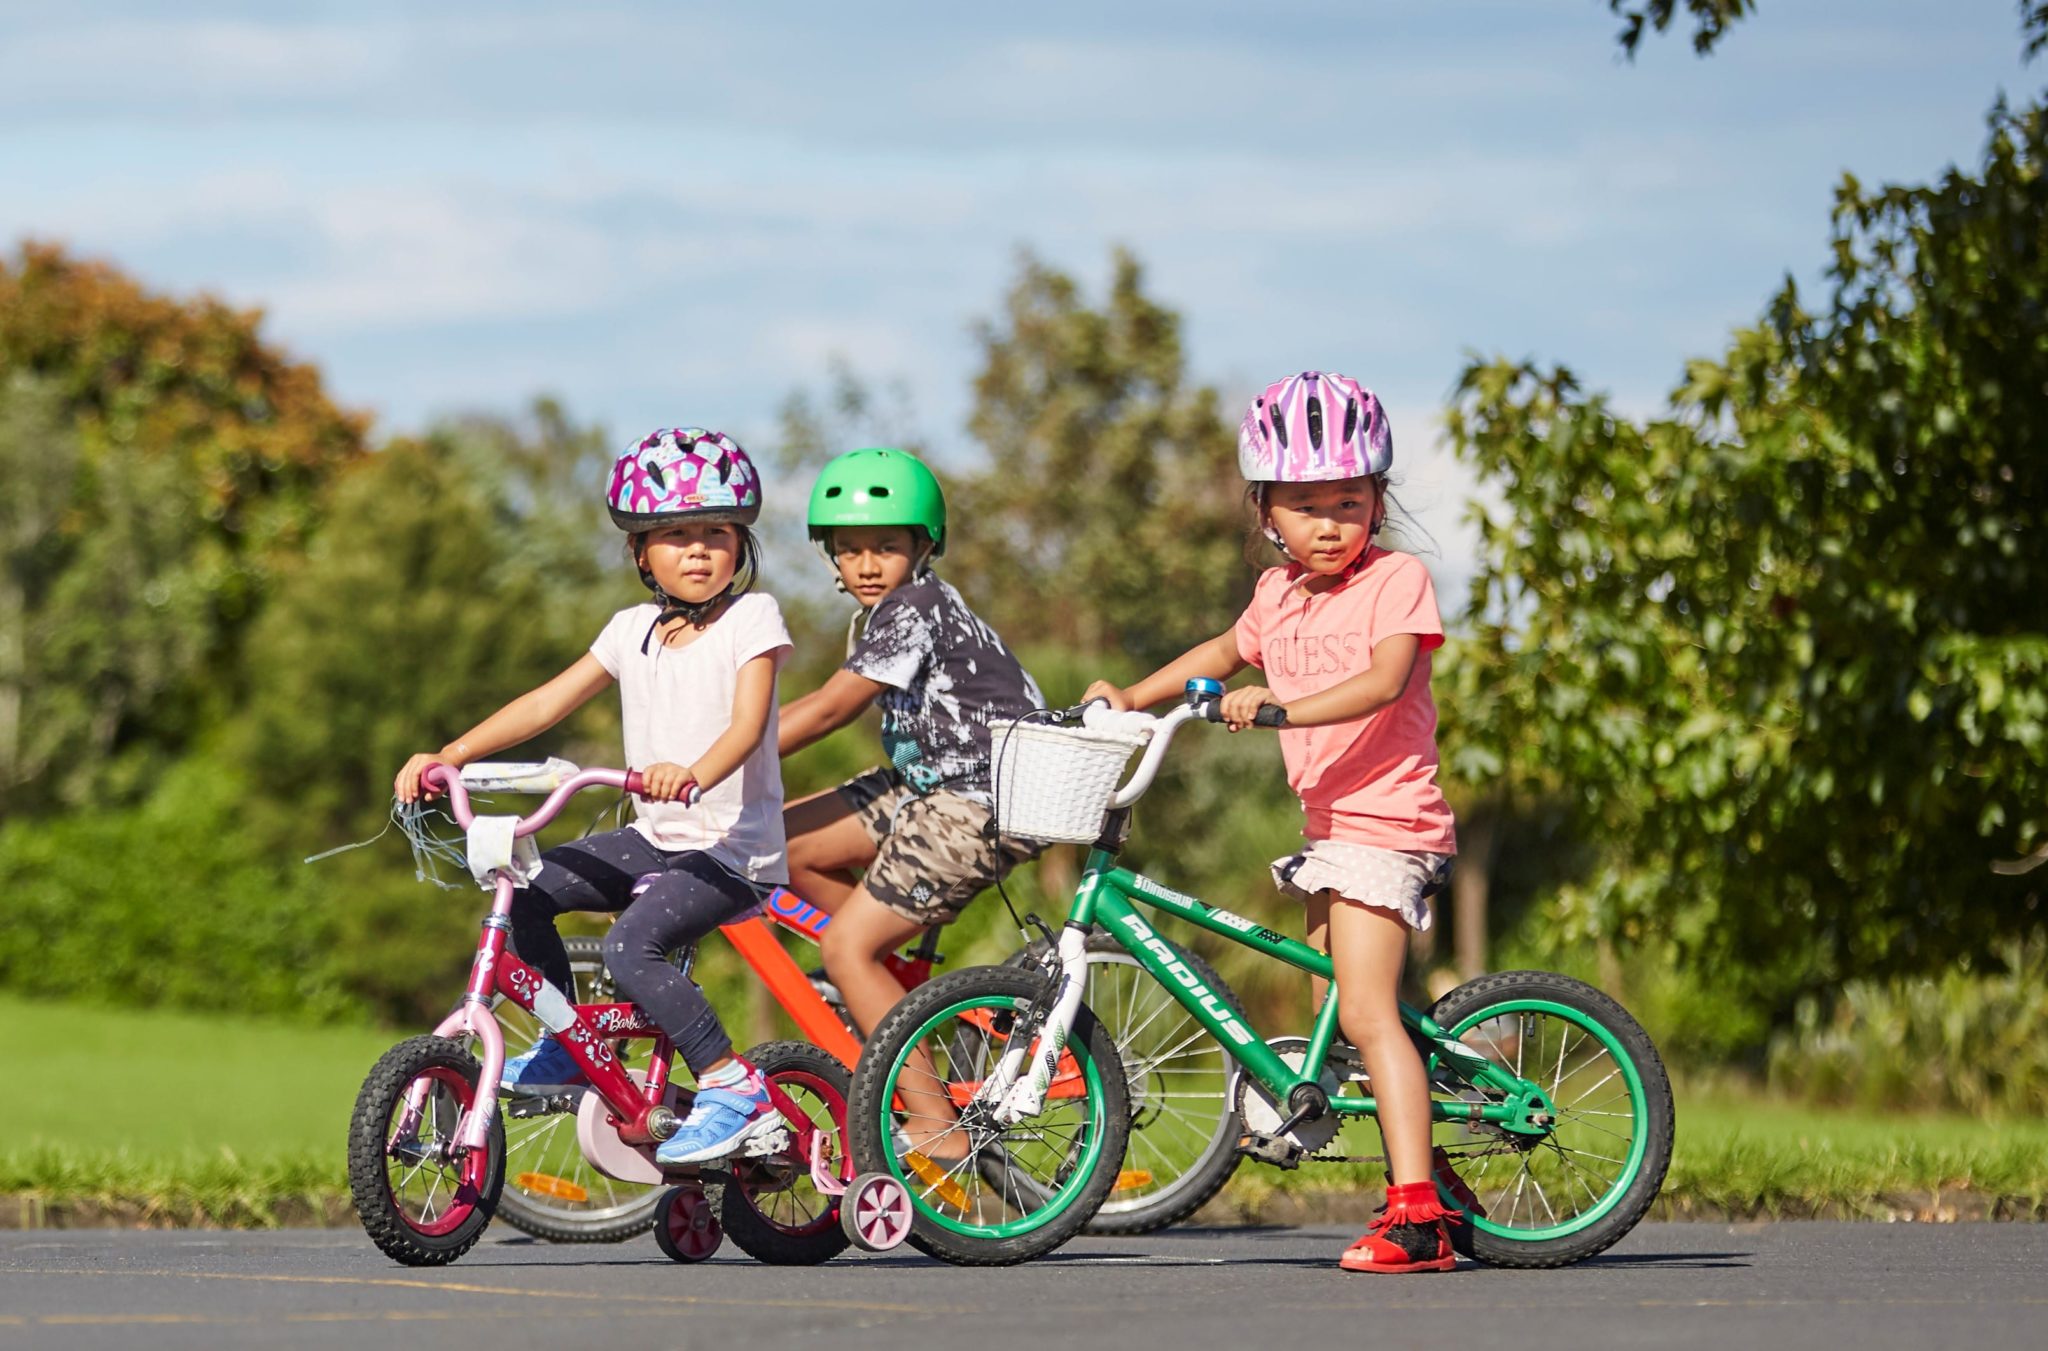 Children riding Bicycles. Ride their bikes